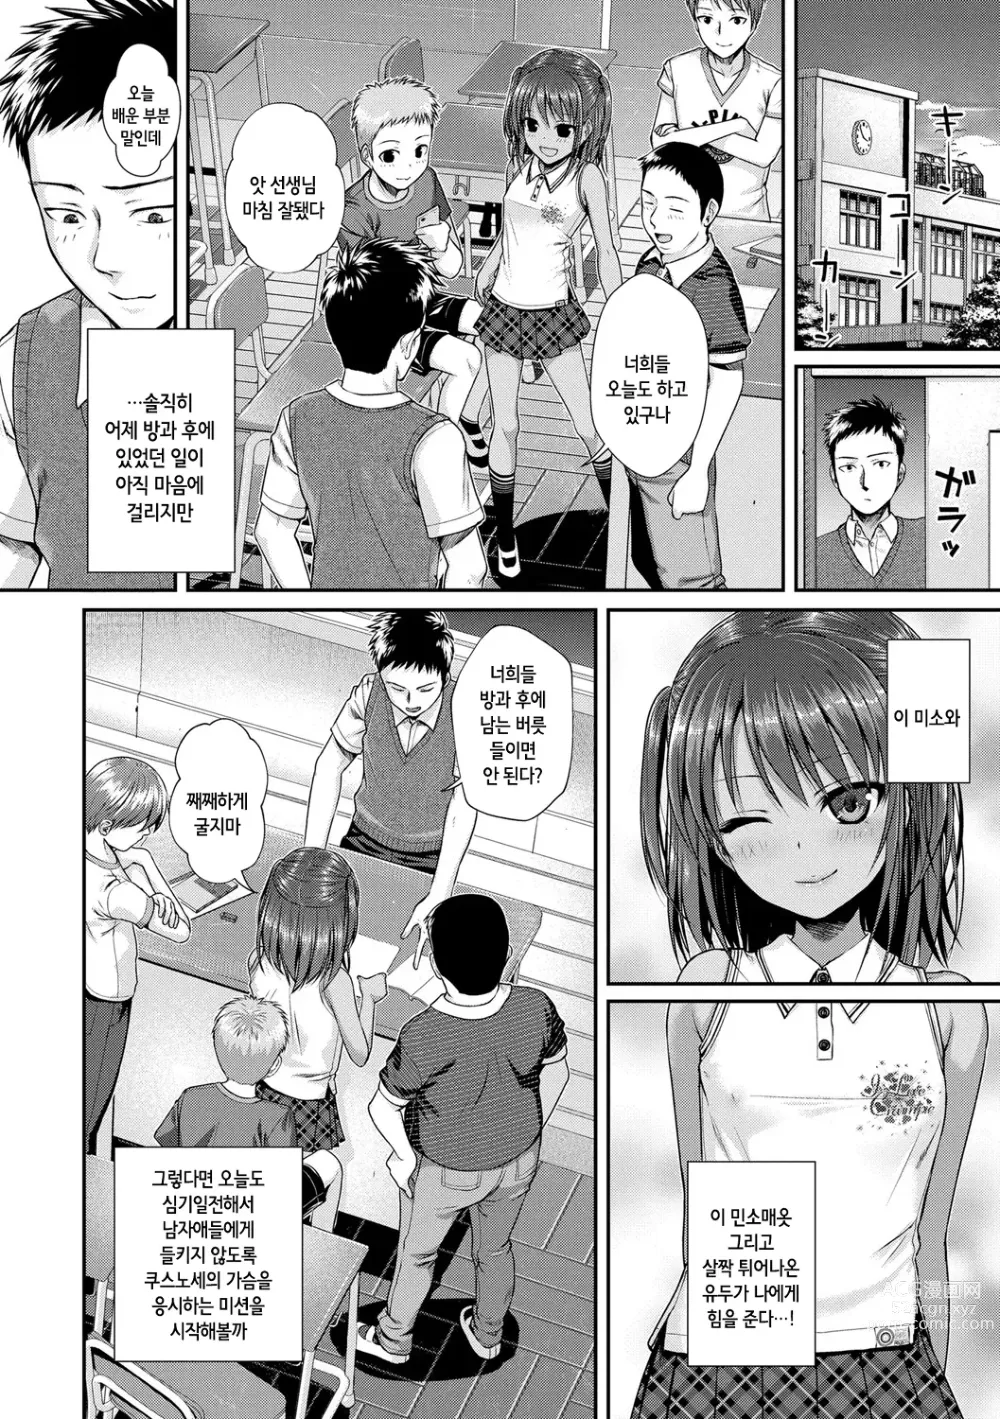 Page 14 of manga 프로토타입 로리타 + 토라노아나 구입 특전 4P 리플렛 휴일은 아저씨와 (decensored)